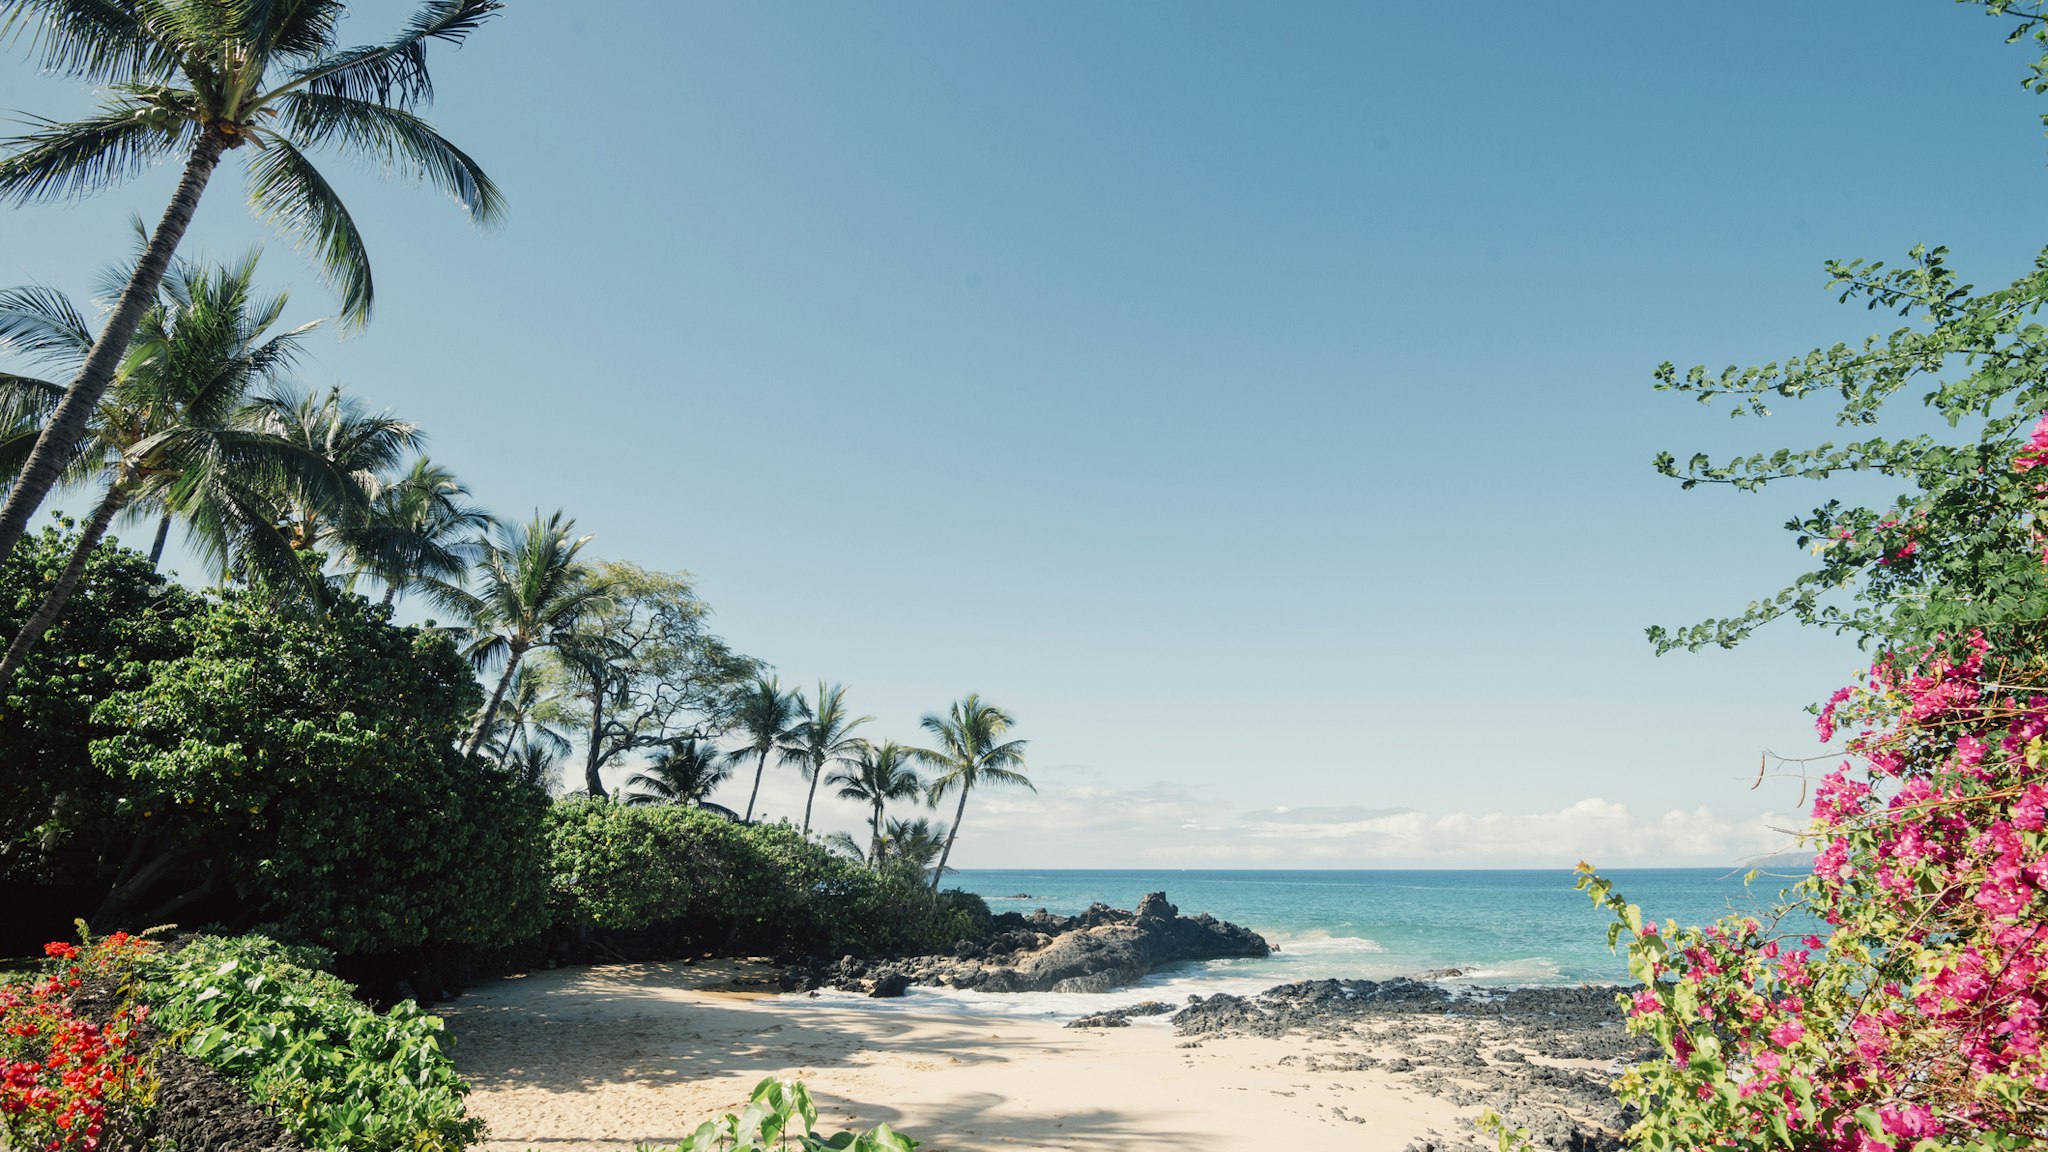 tropical beach with palm tree and flowers in makena, maui, hawaii